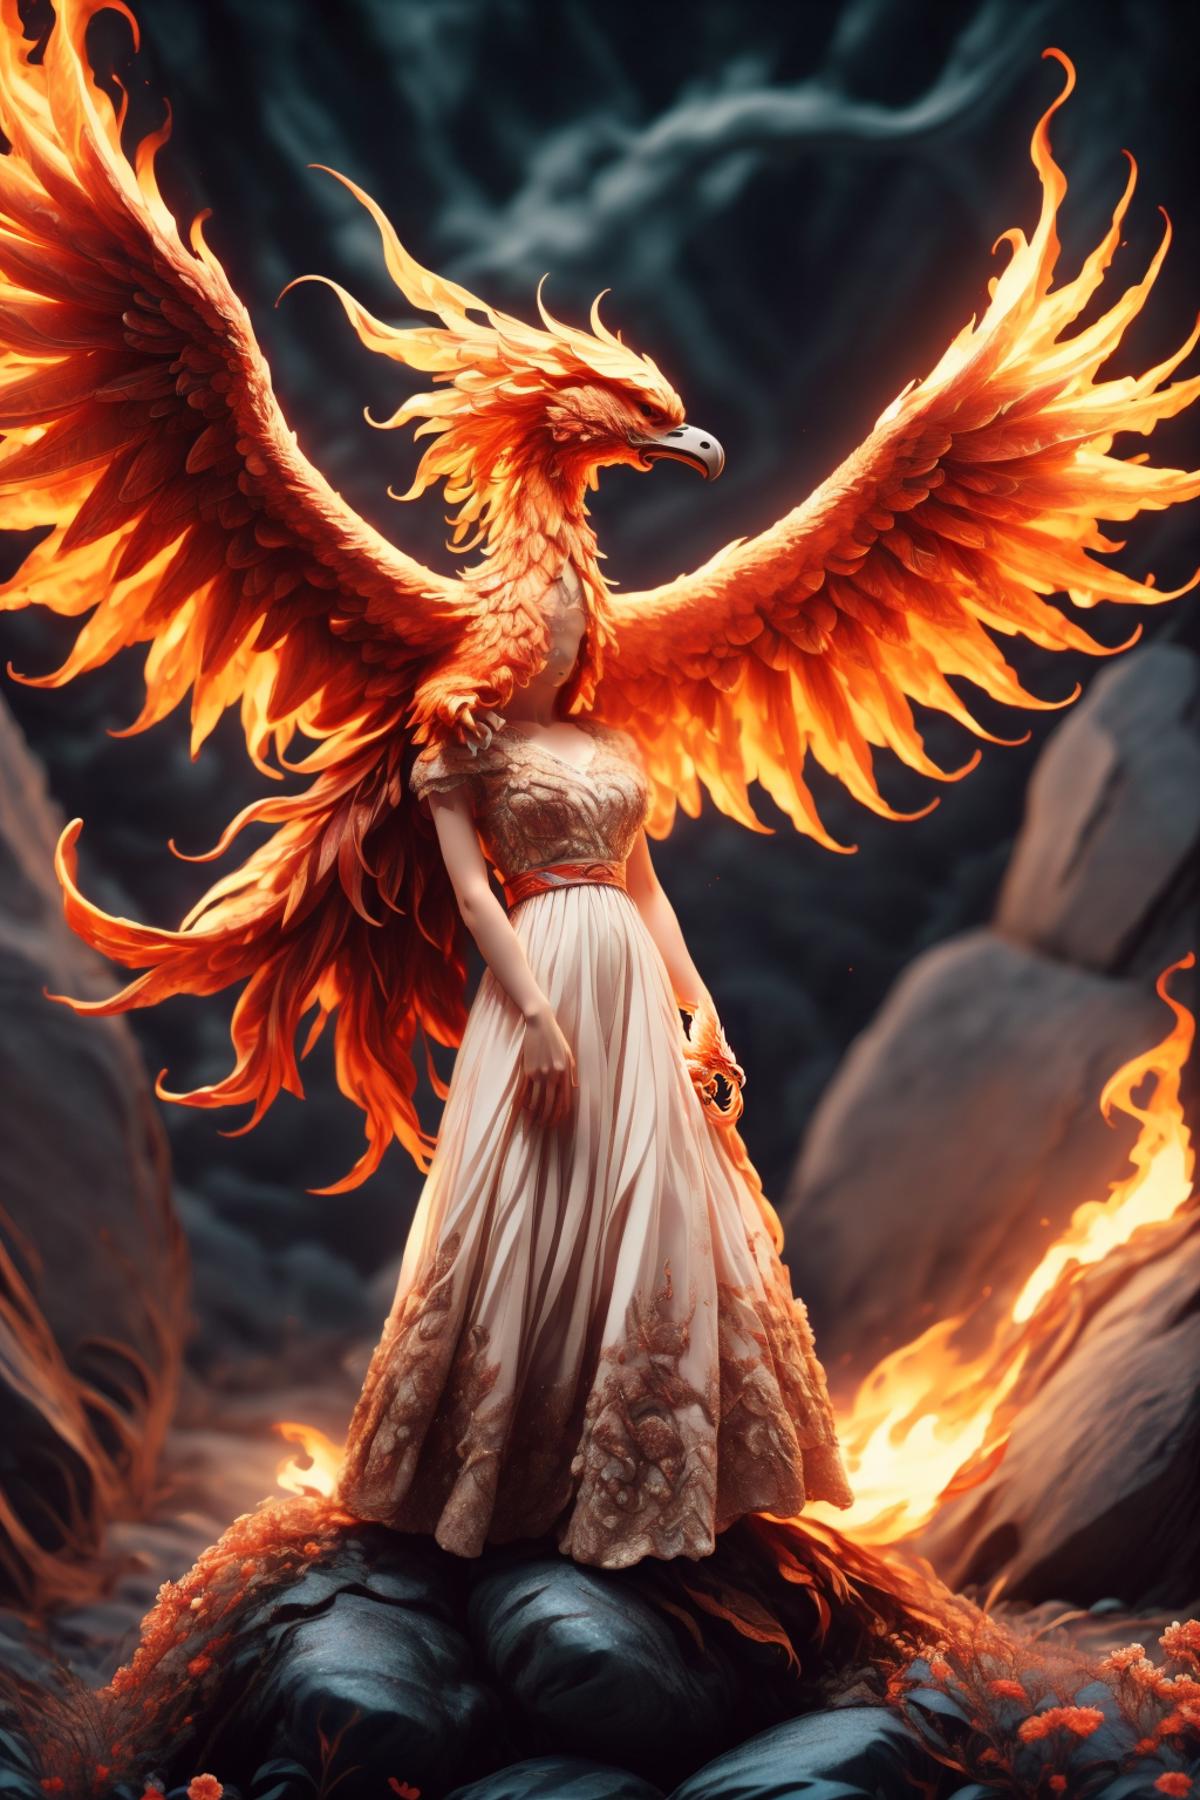 Phoenix | Sora SD1.5 image by traithanhnam90